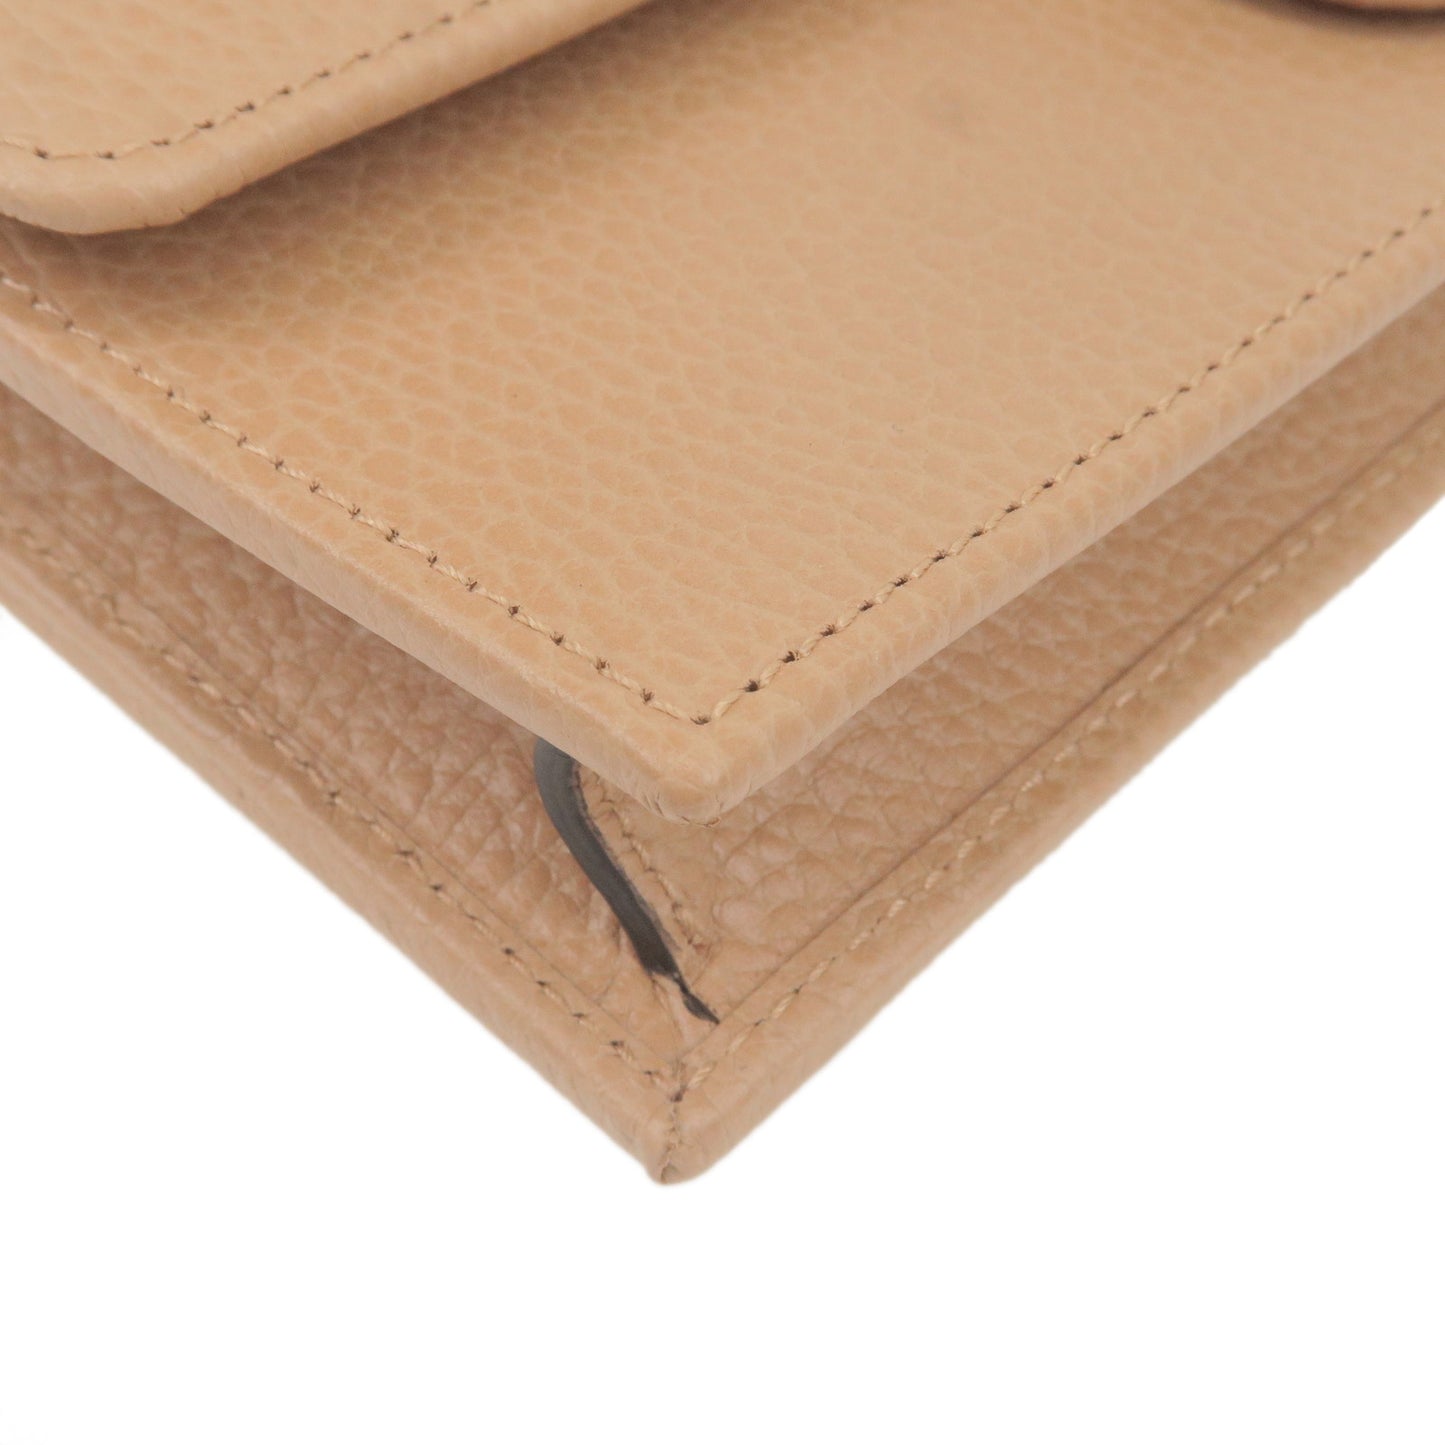 GUCCI Interlocking G Leather Chain Shoulder Bag Wallet 615523